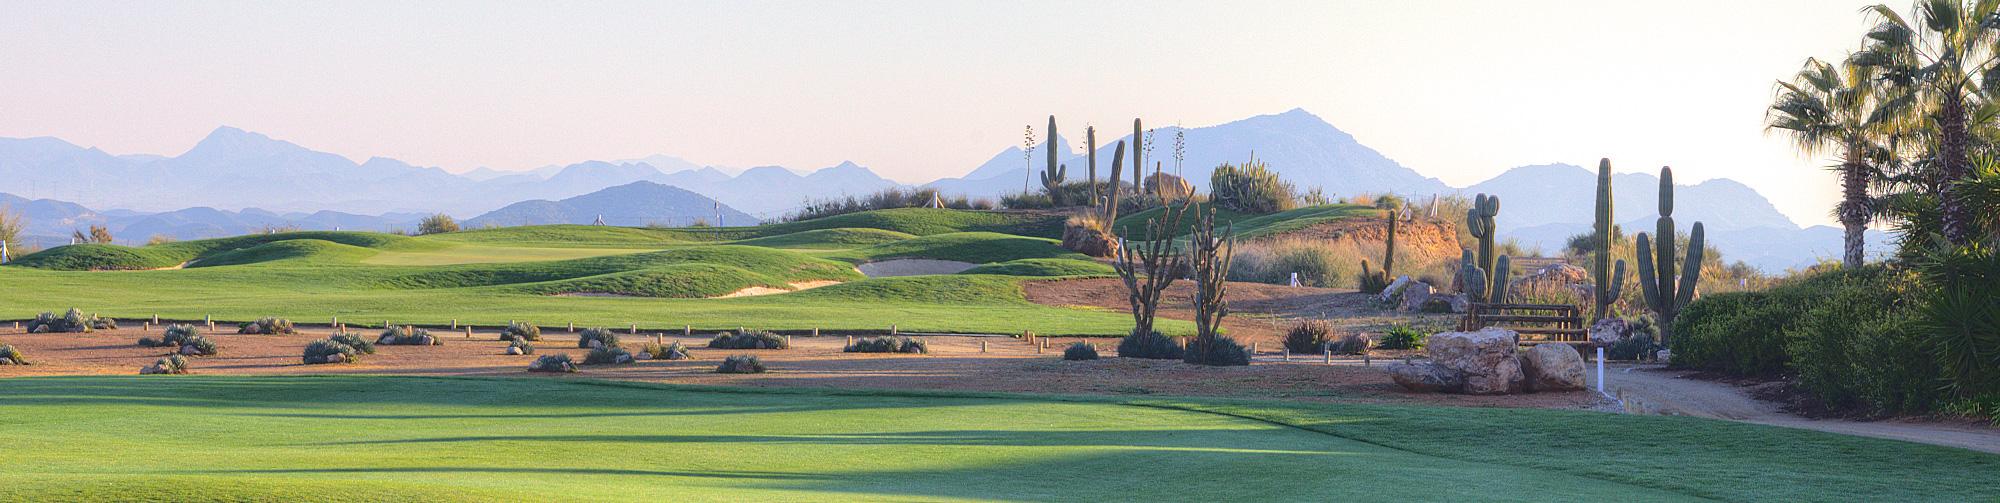 The Desert Springs Golf Club's picturesque golf course in gorgeous Costa Almeria.